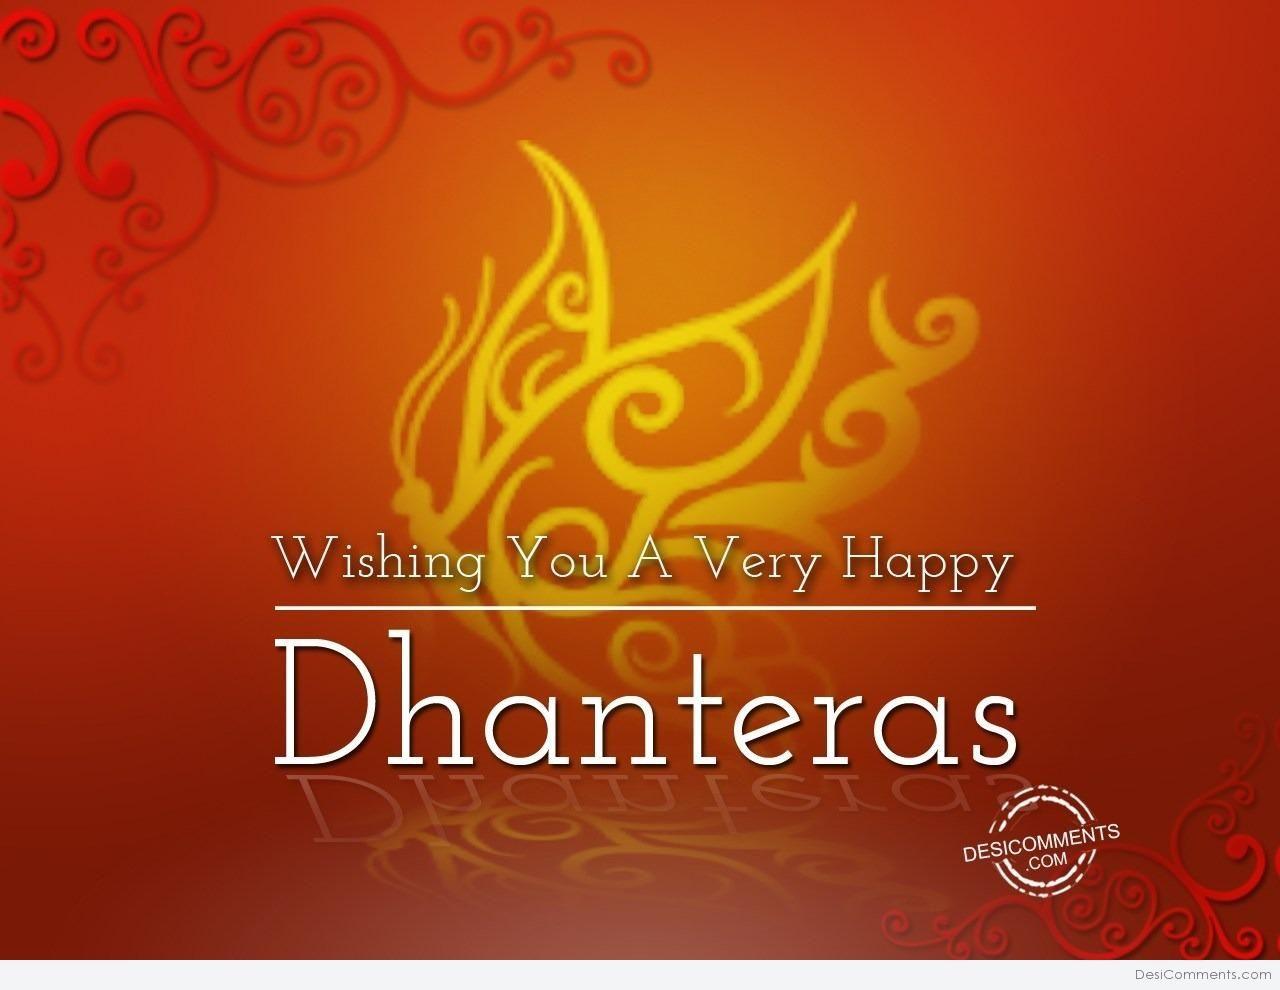 धनतेरस २०१७}* Dhanteras Image, GIF, 3D Wallpaper, Puja